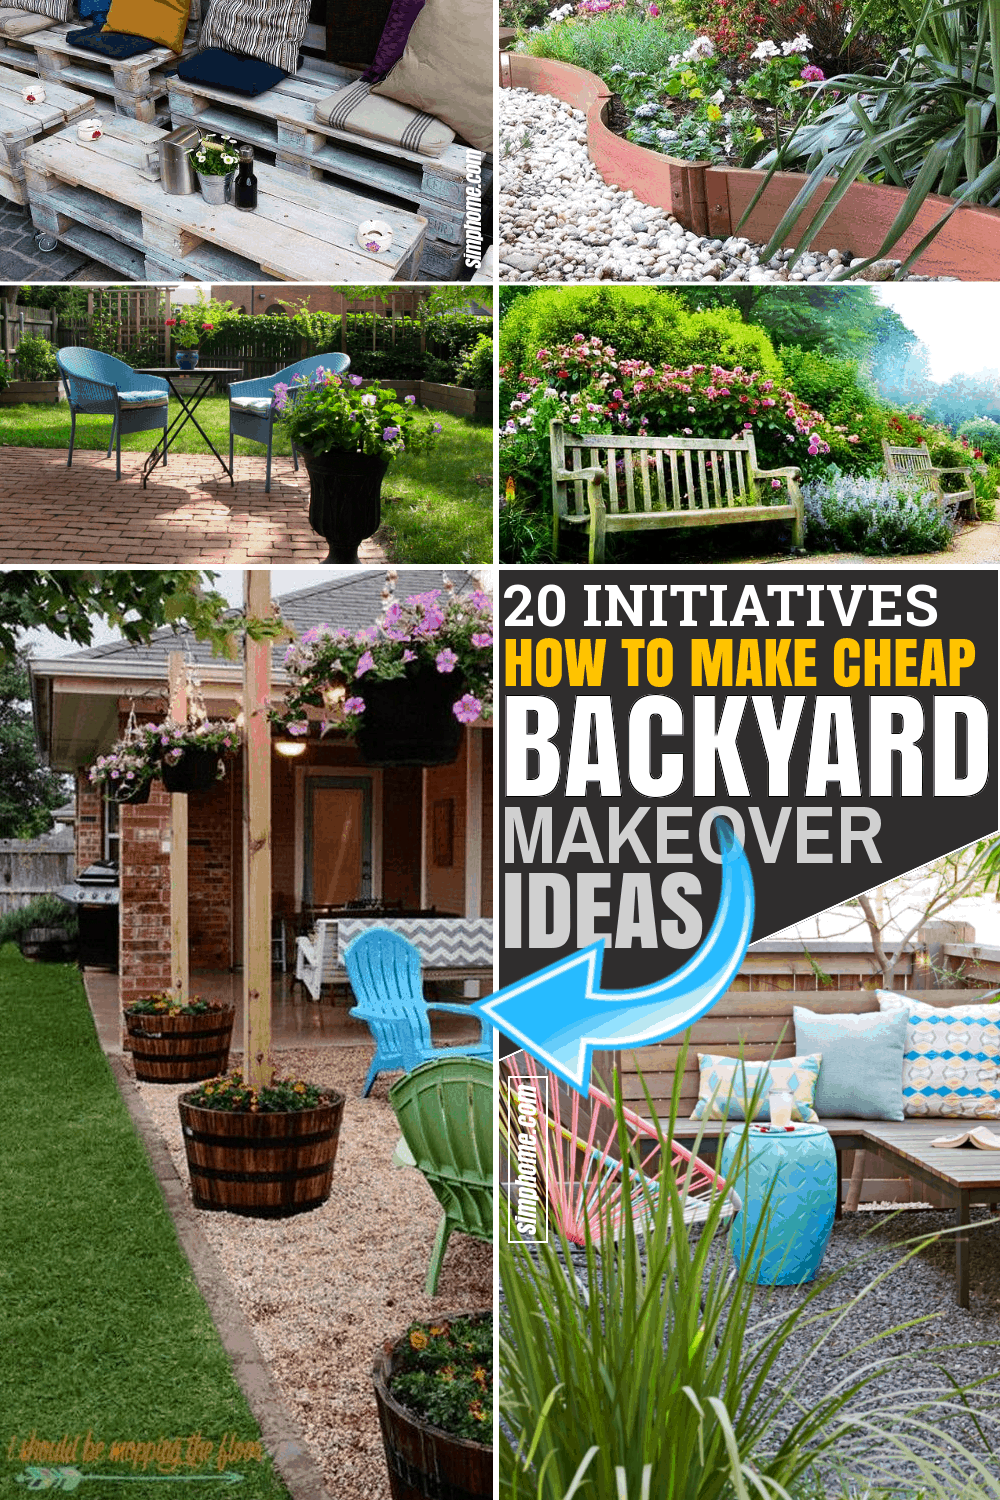 SIMPHOME.COM 10 IDEAS how to make cheap backyard makeover Pinterest Featured Image